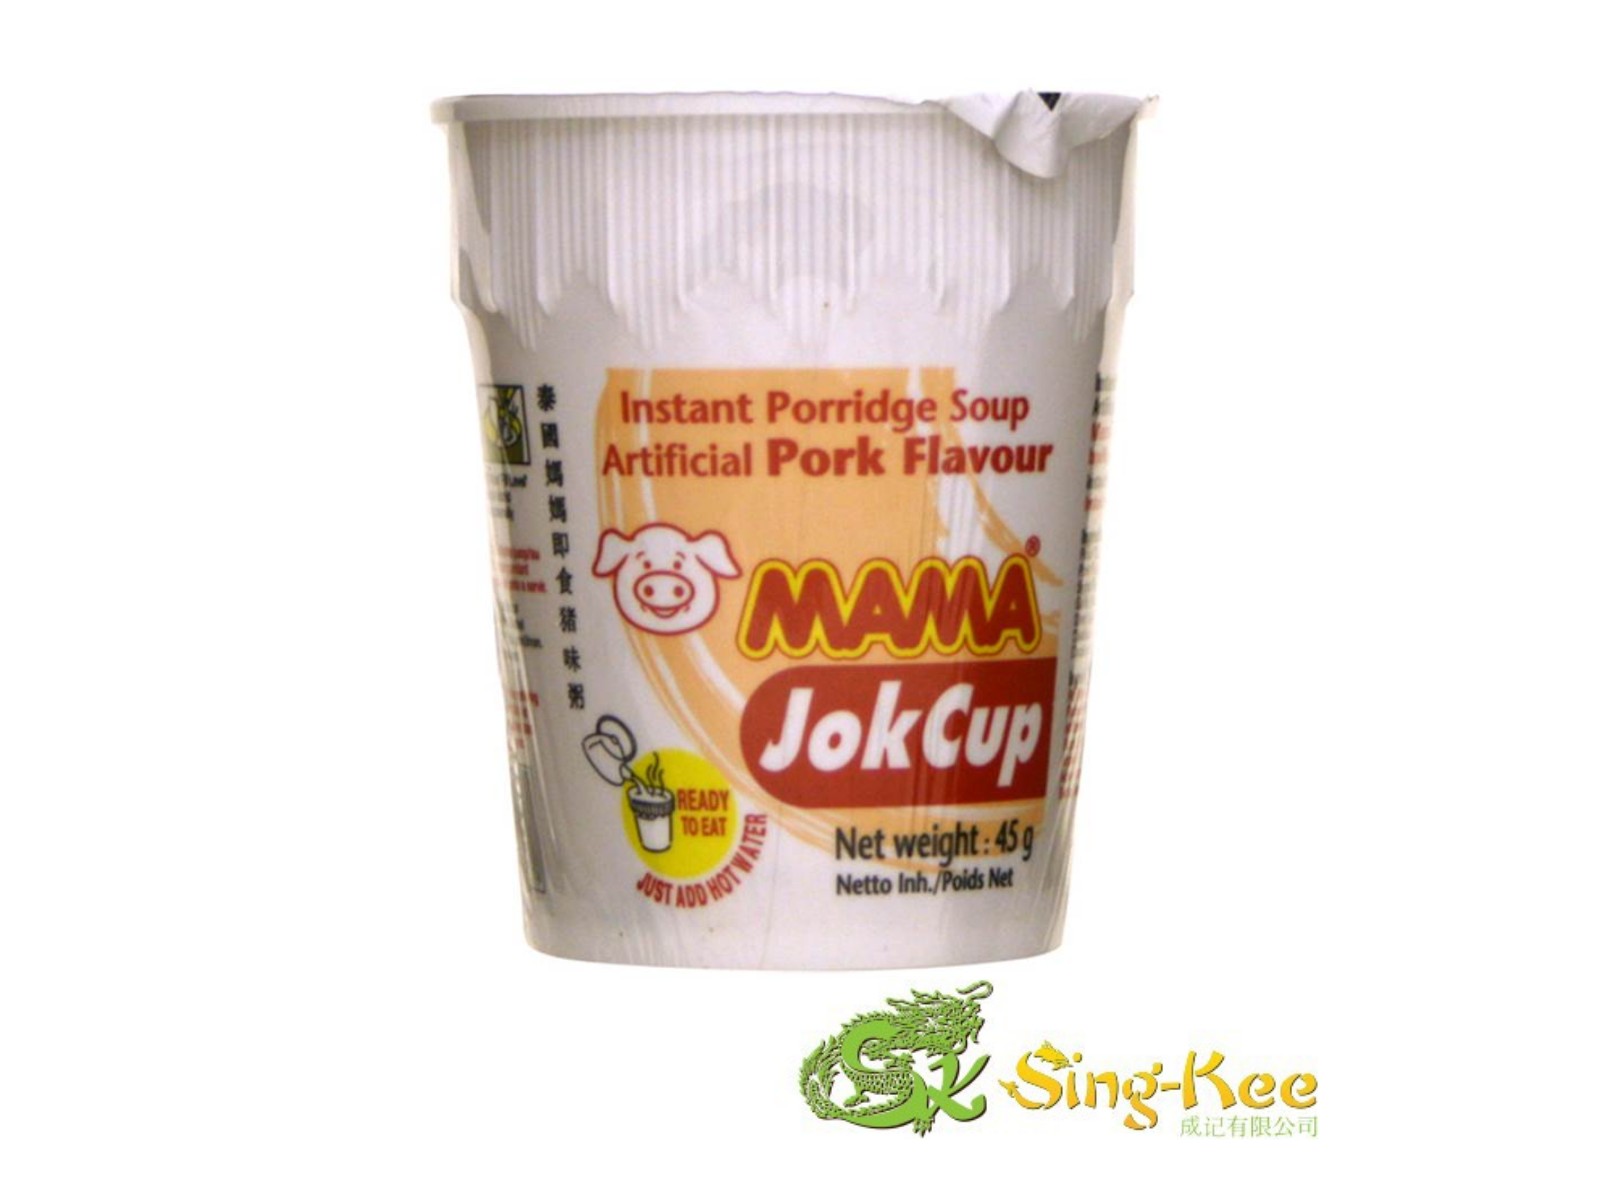 MAMA Jok Cup Rice Porridge Pork 45g - Noodles